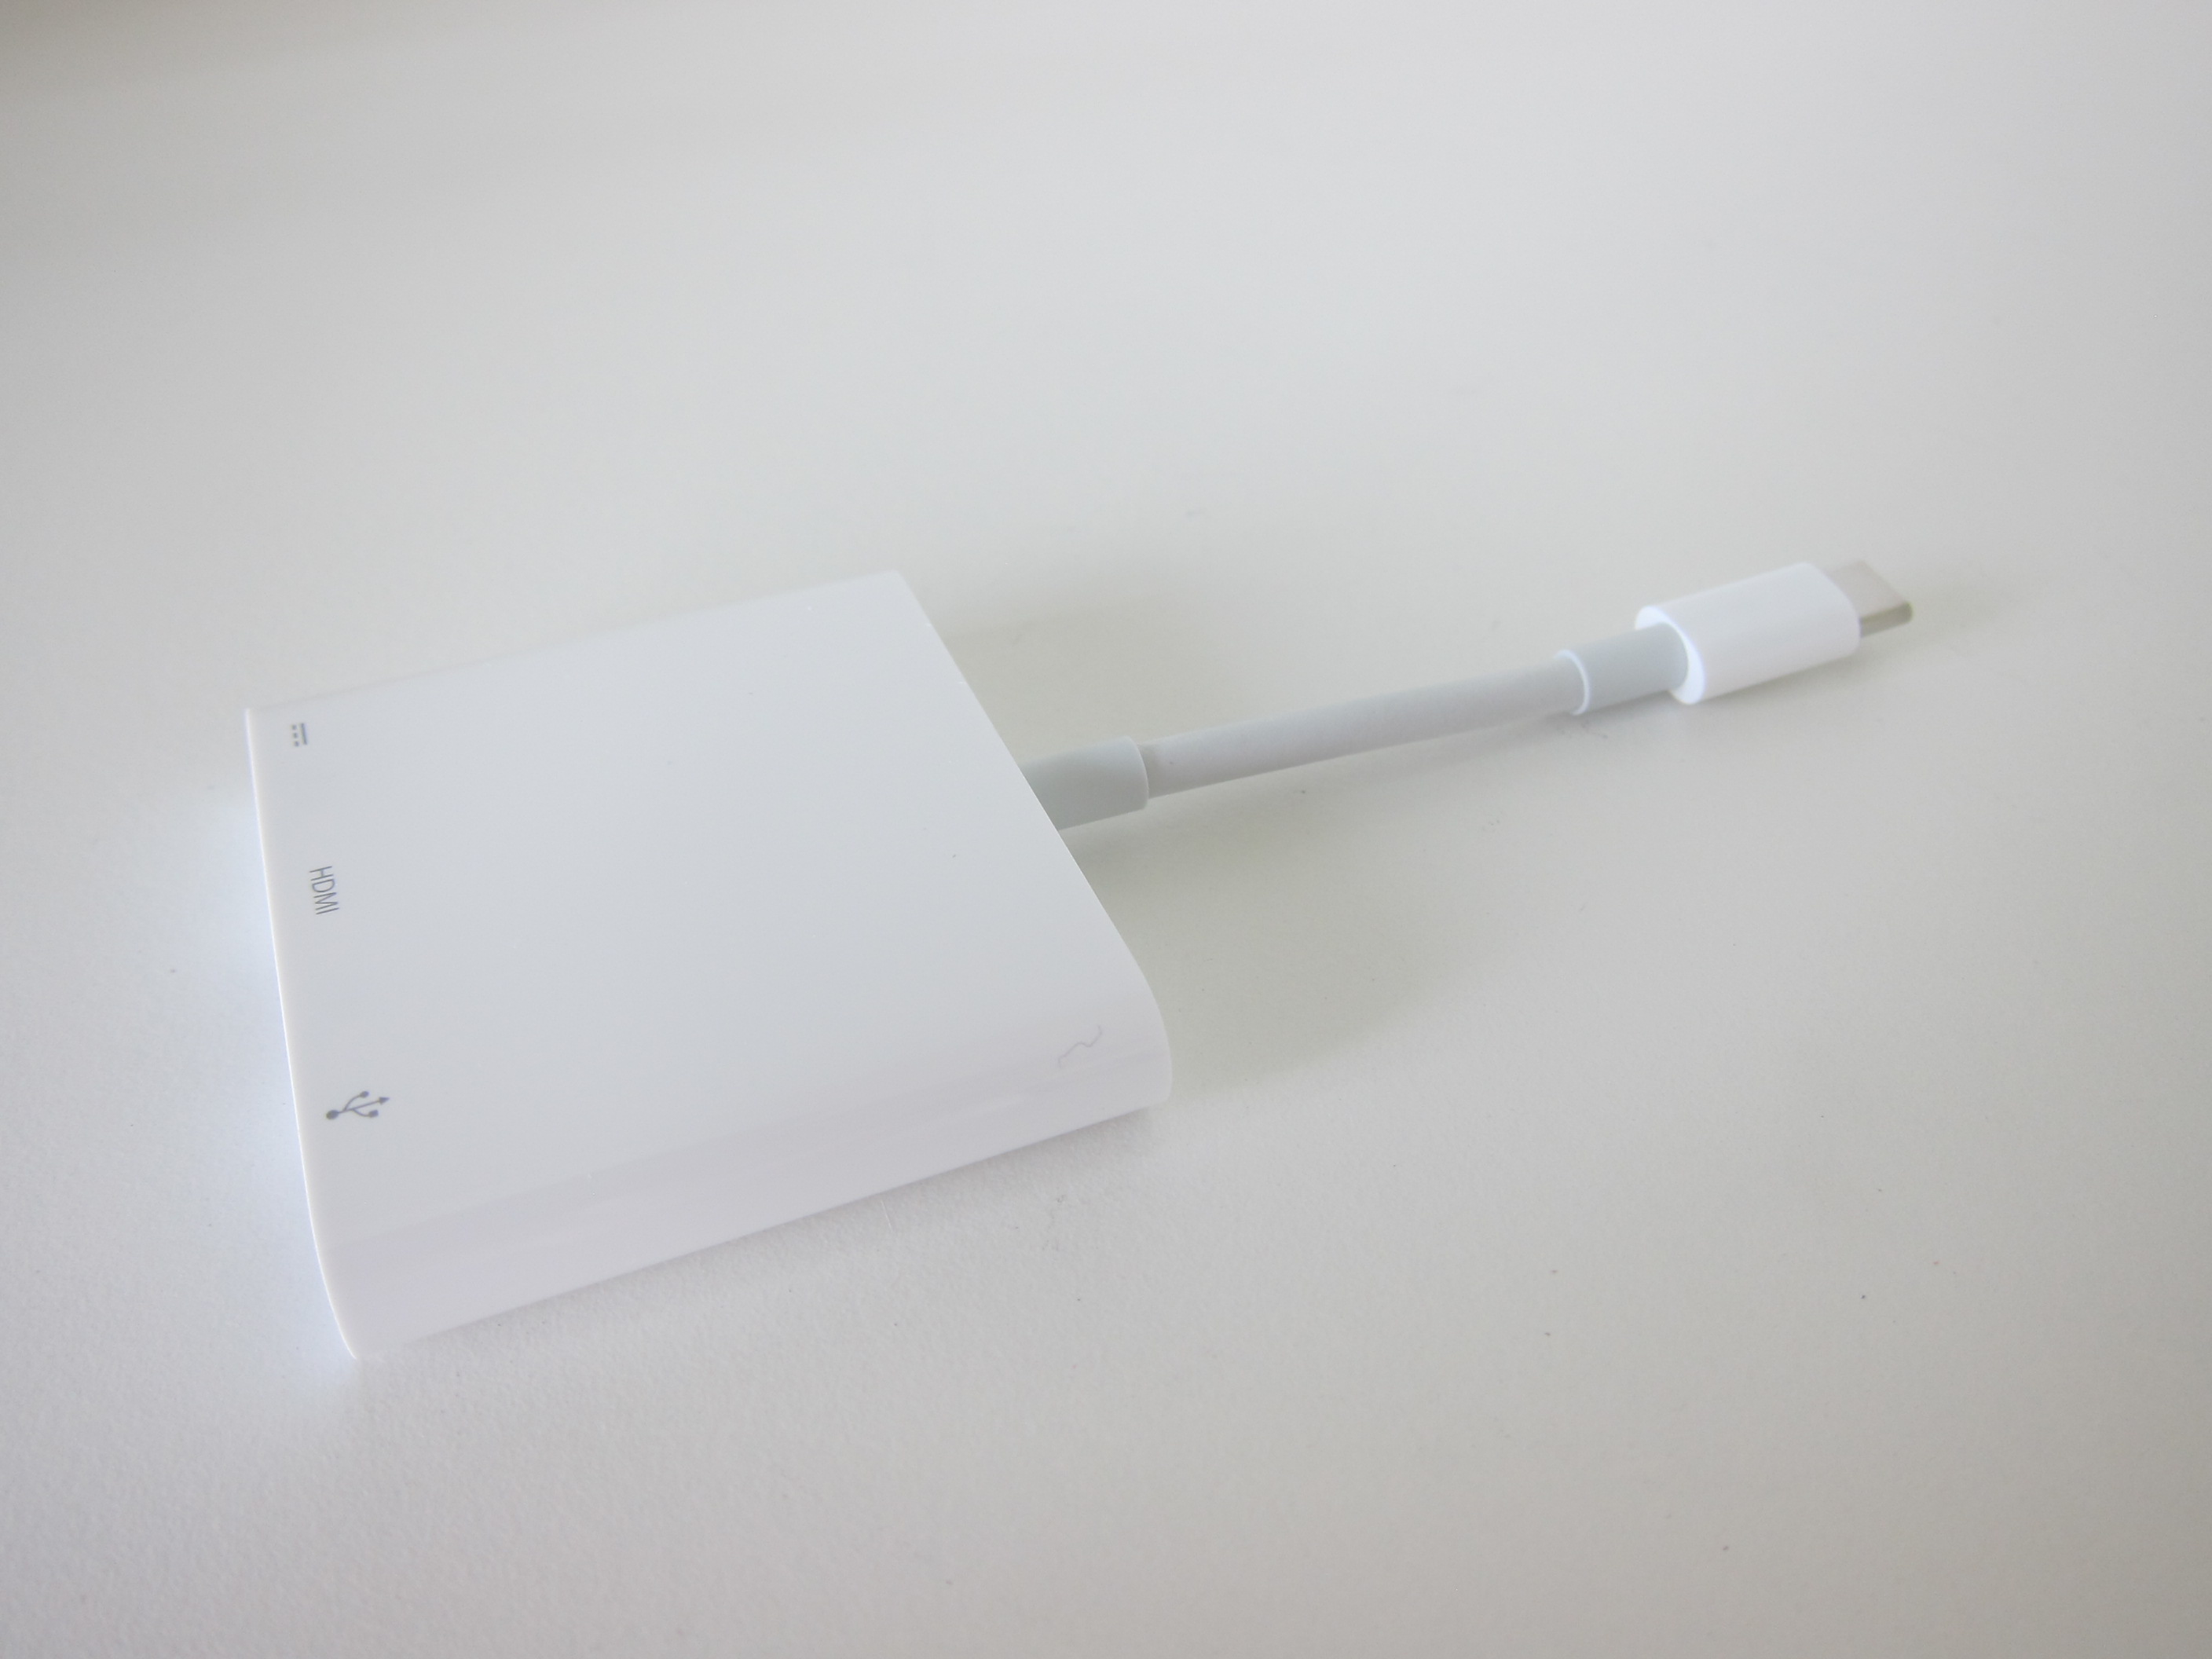 Apple USB-C Digital AV Multiport Adapter « Blog | lesterchan.net